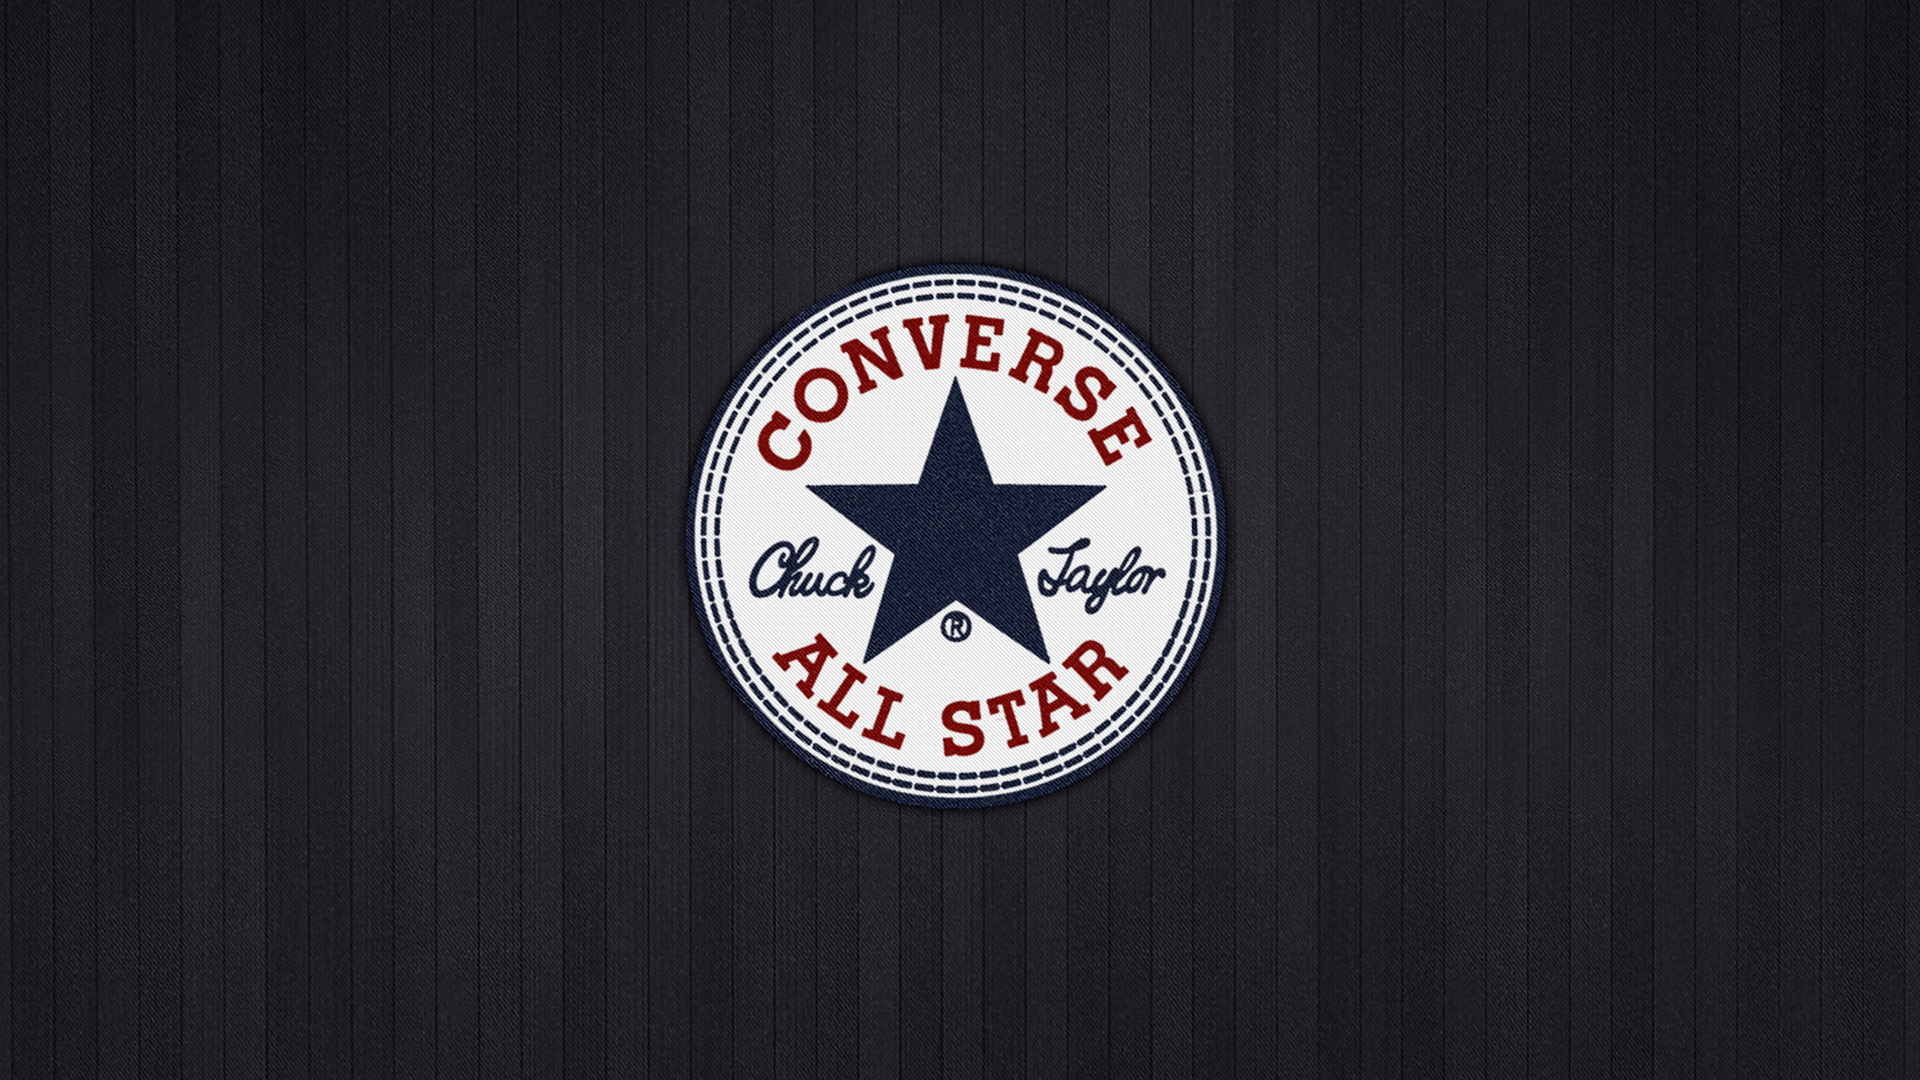 Converse all Star logo